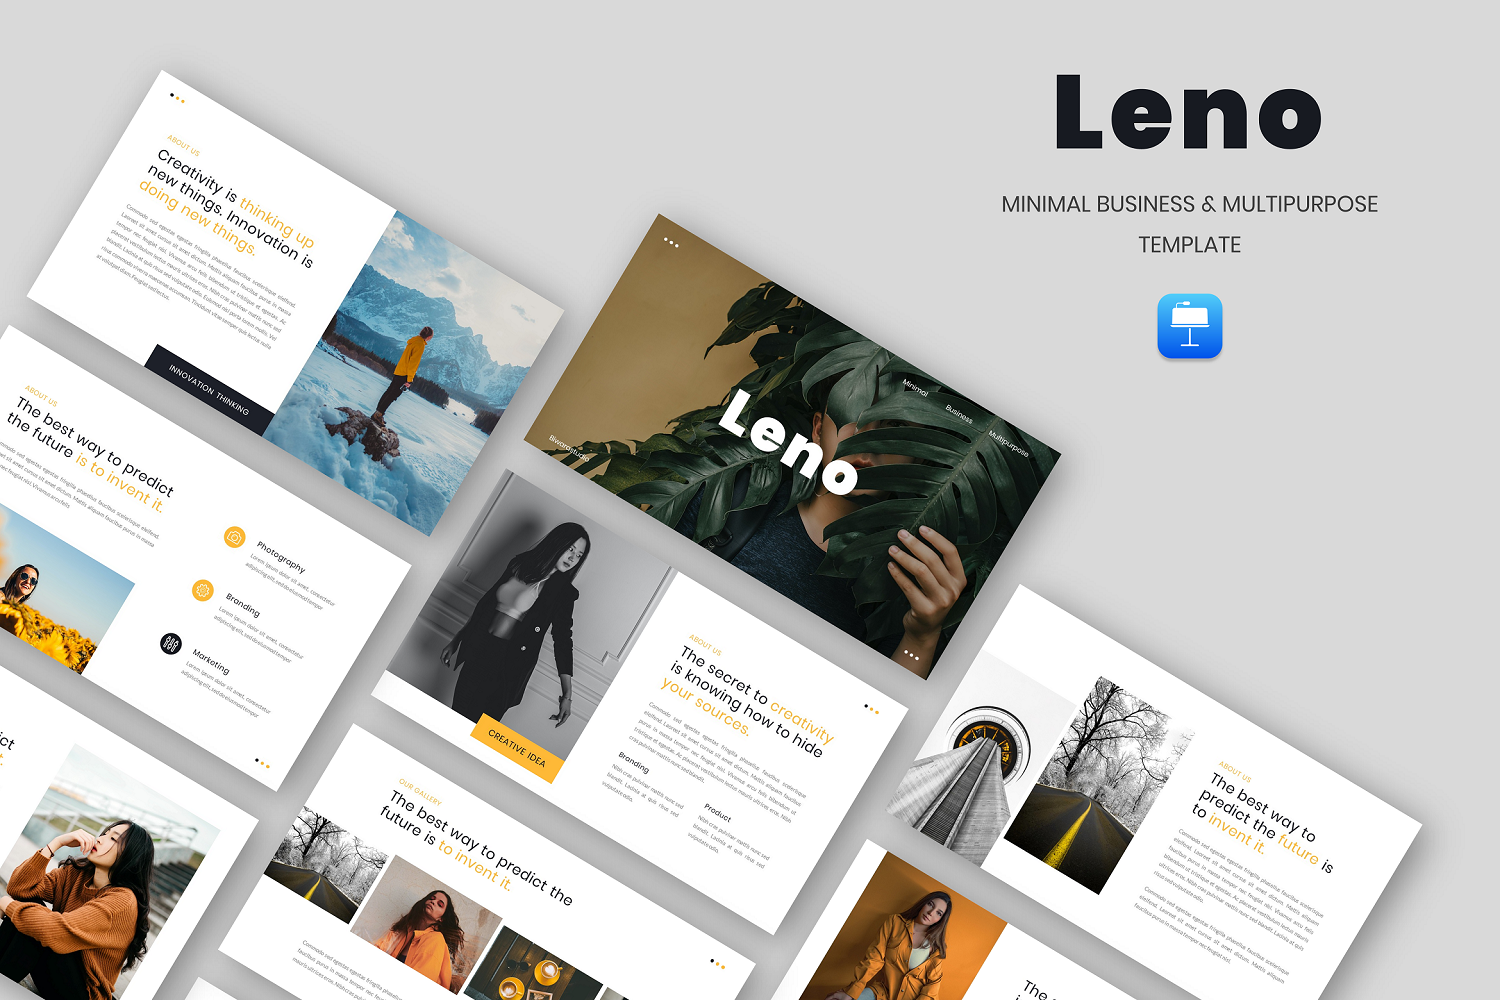 Leno - Minimal Business & Multipurpose Keynote Template